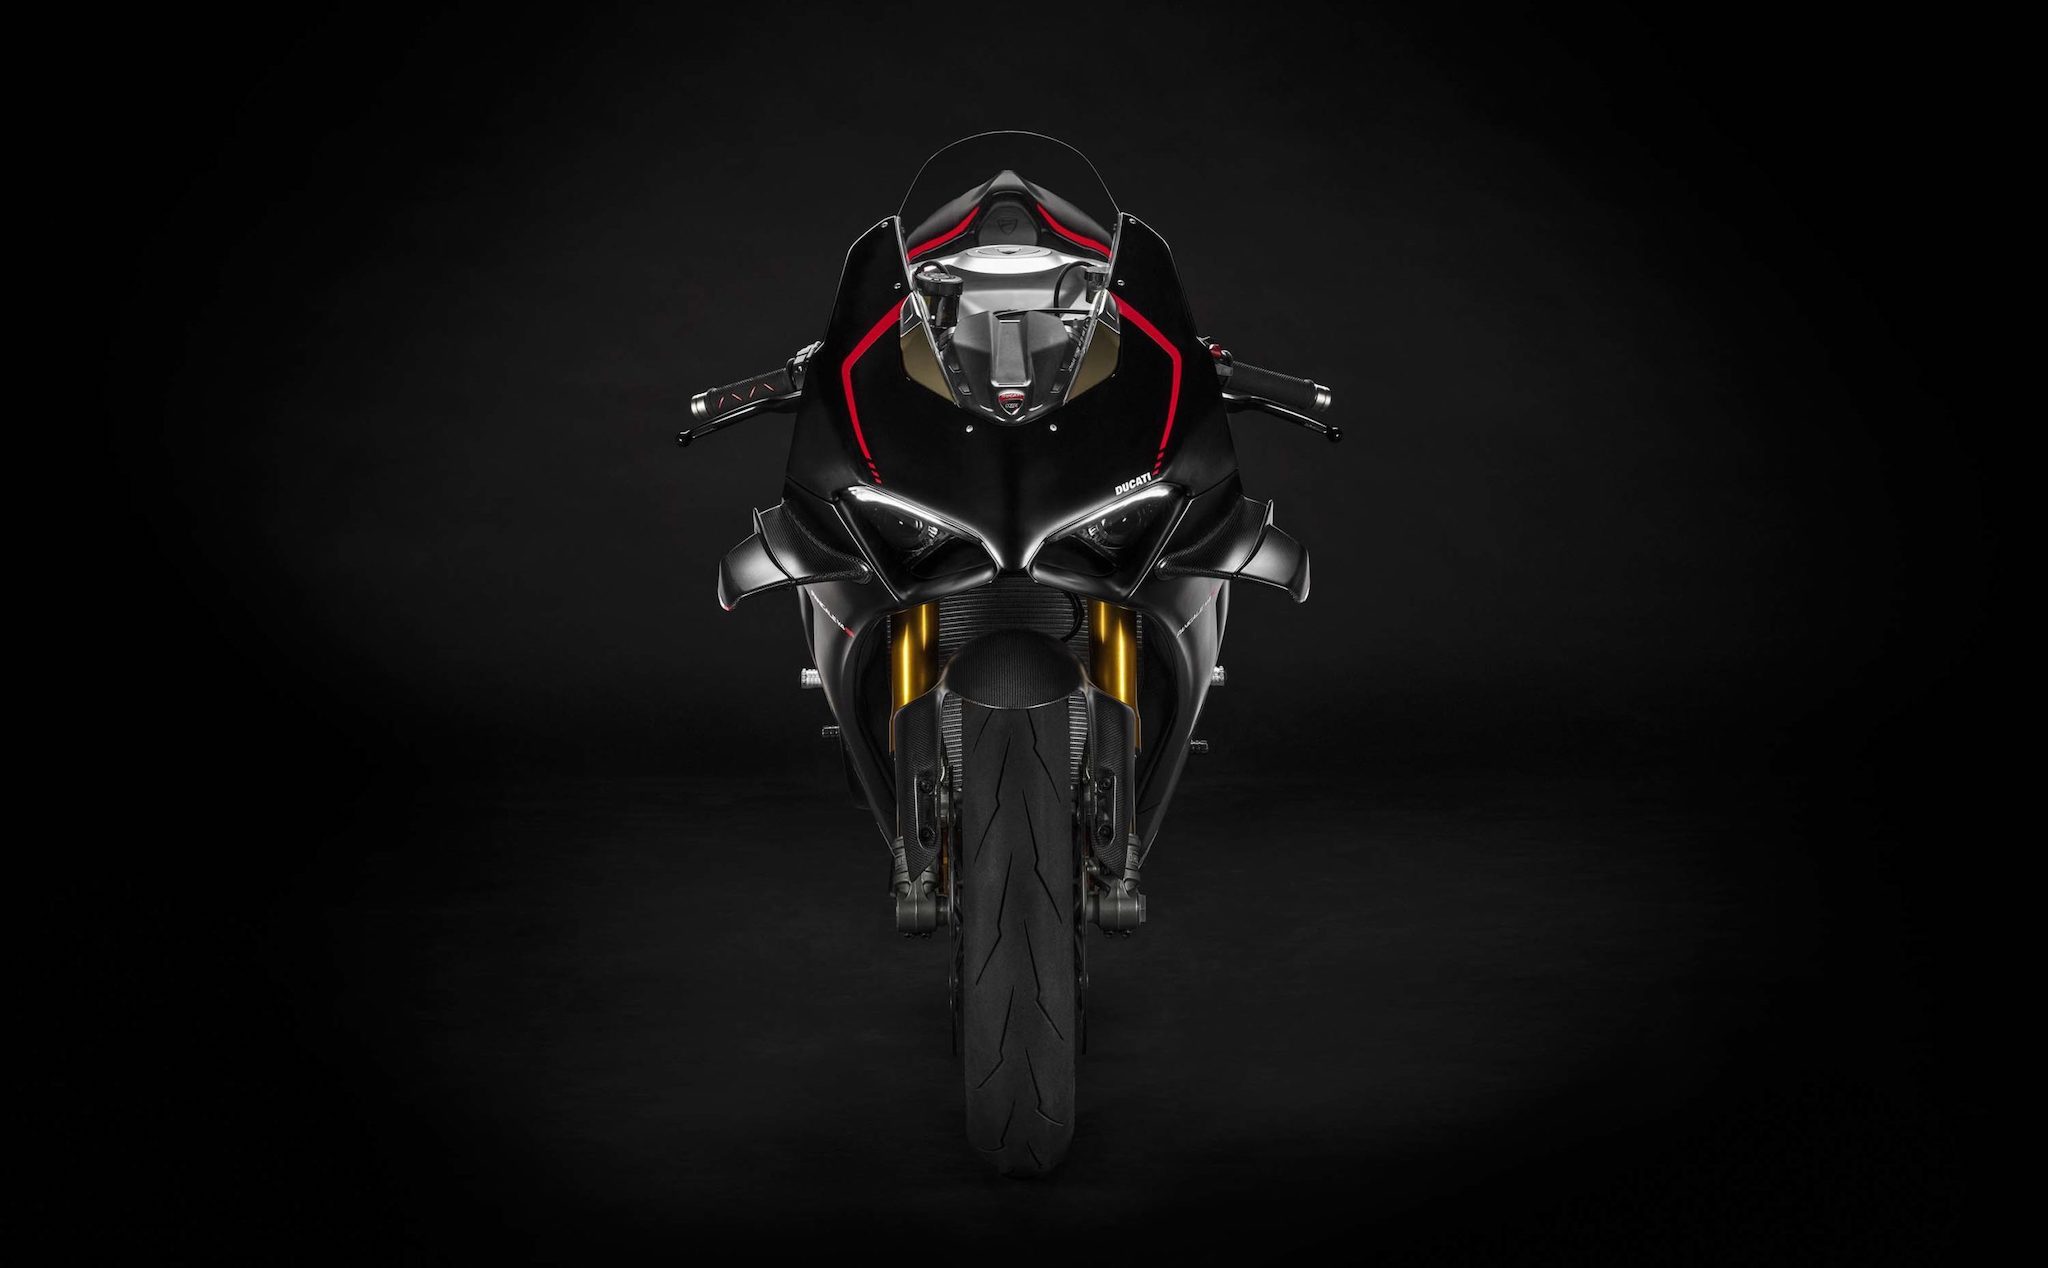 2020 Ducati Superleggera V4 Wallpapers | HD Wallpapers | ID #30393